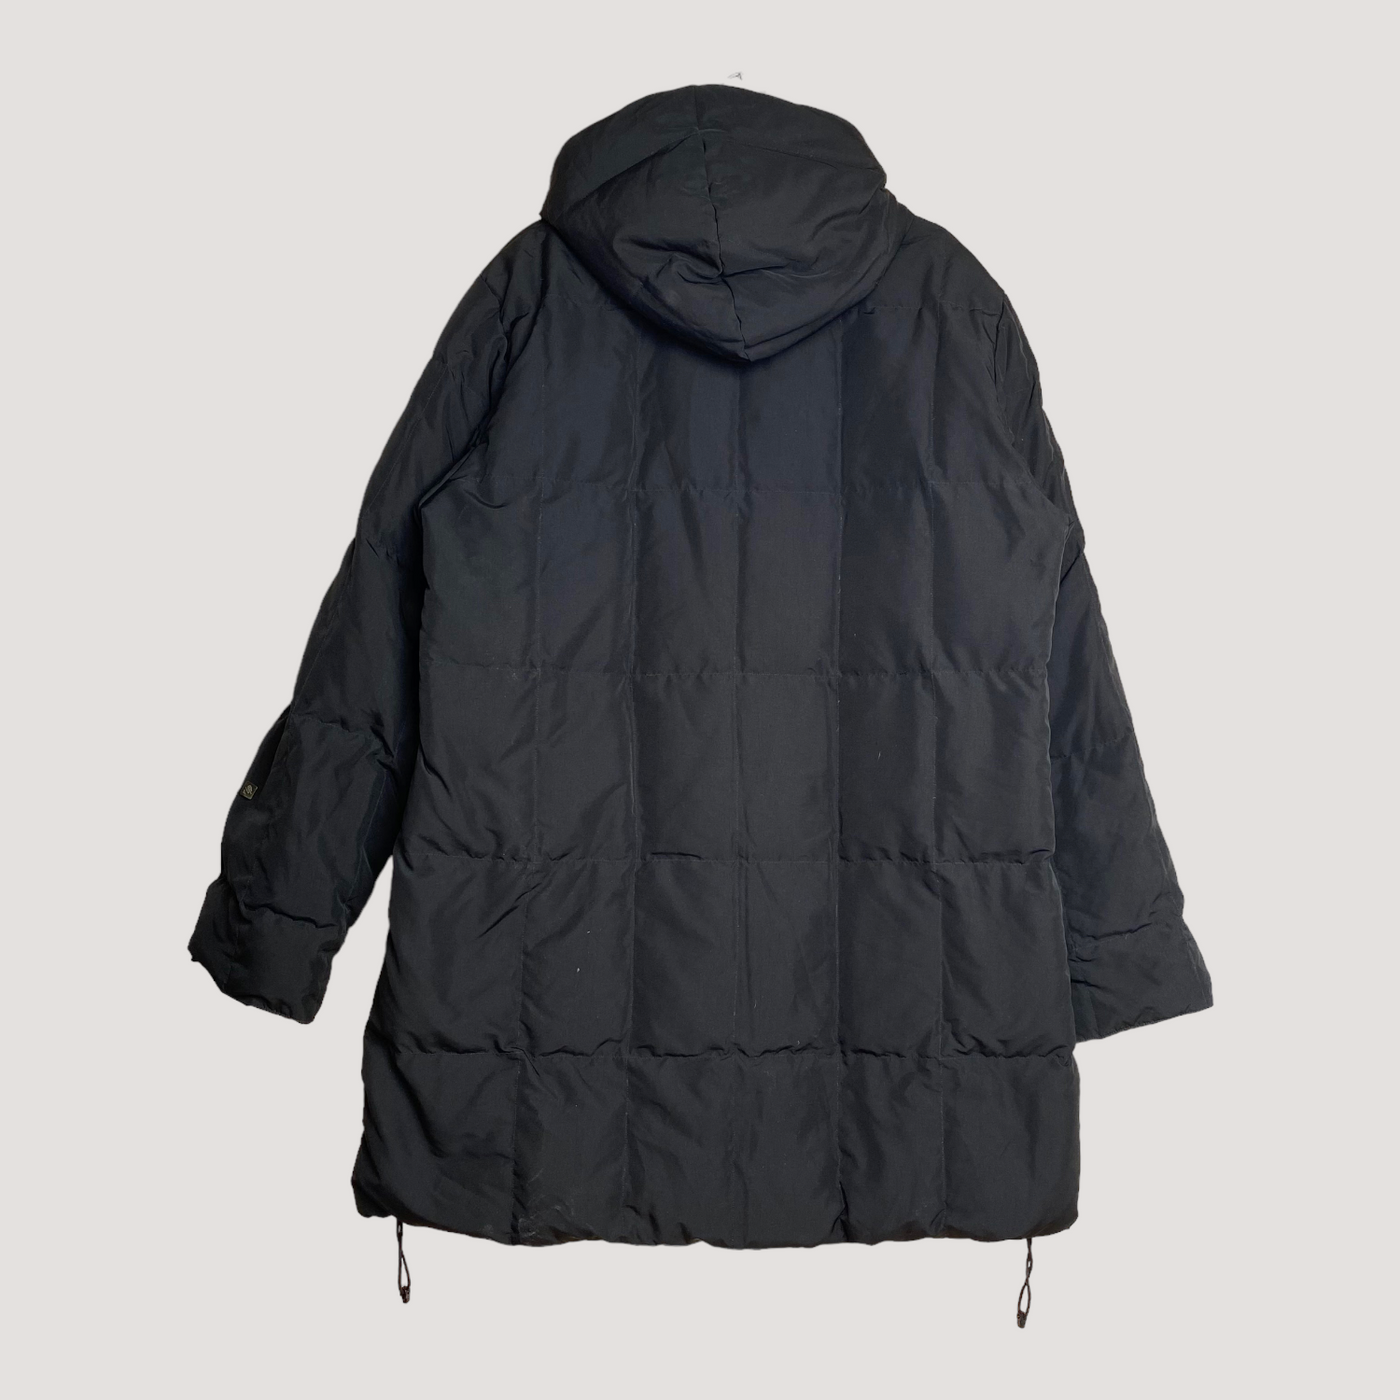 Joutsen alison jacket, black | woman XL